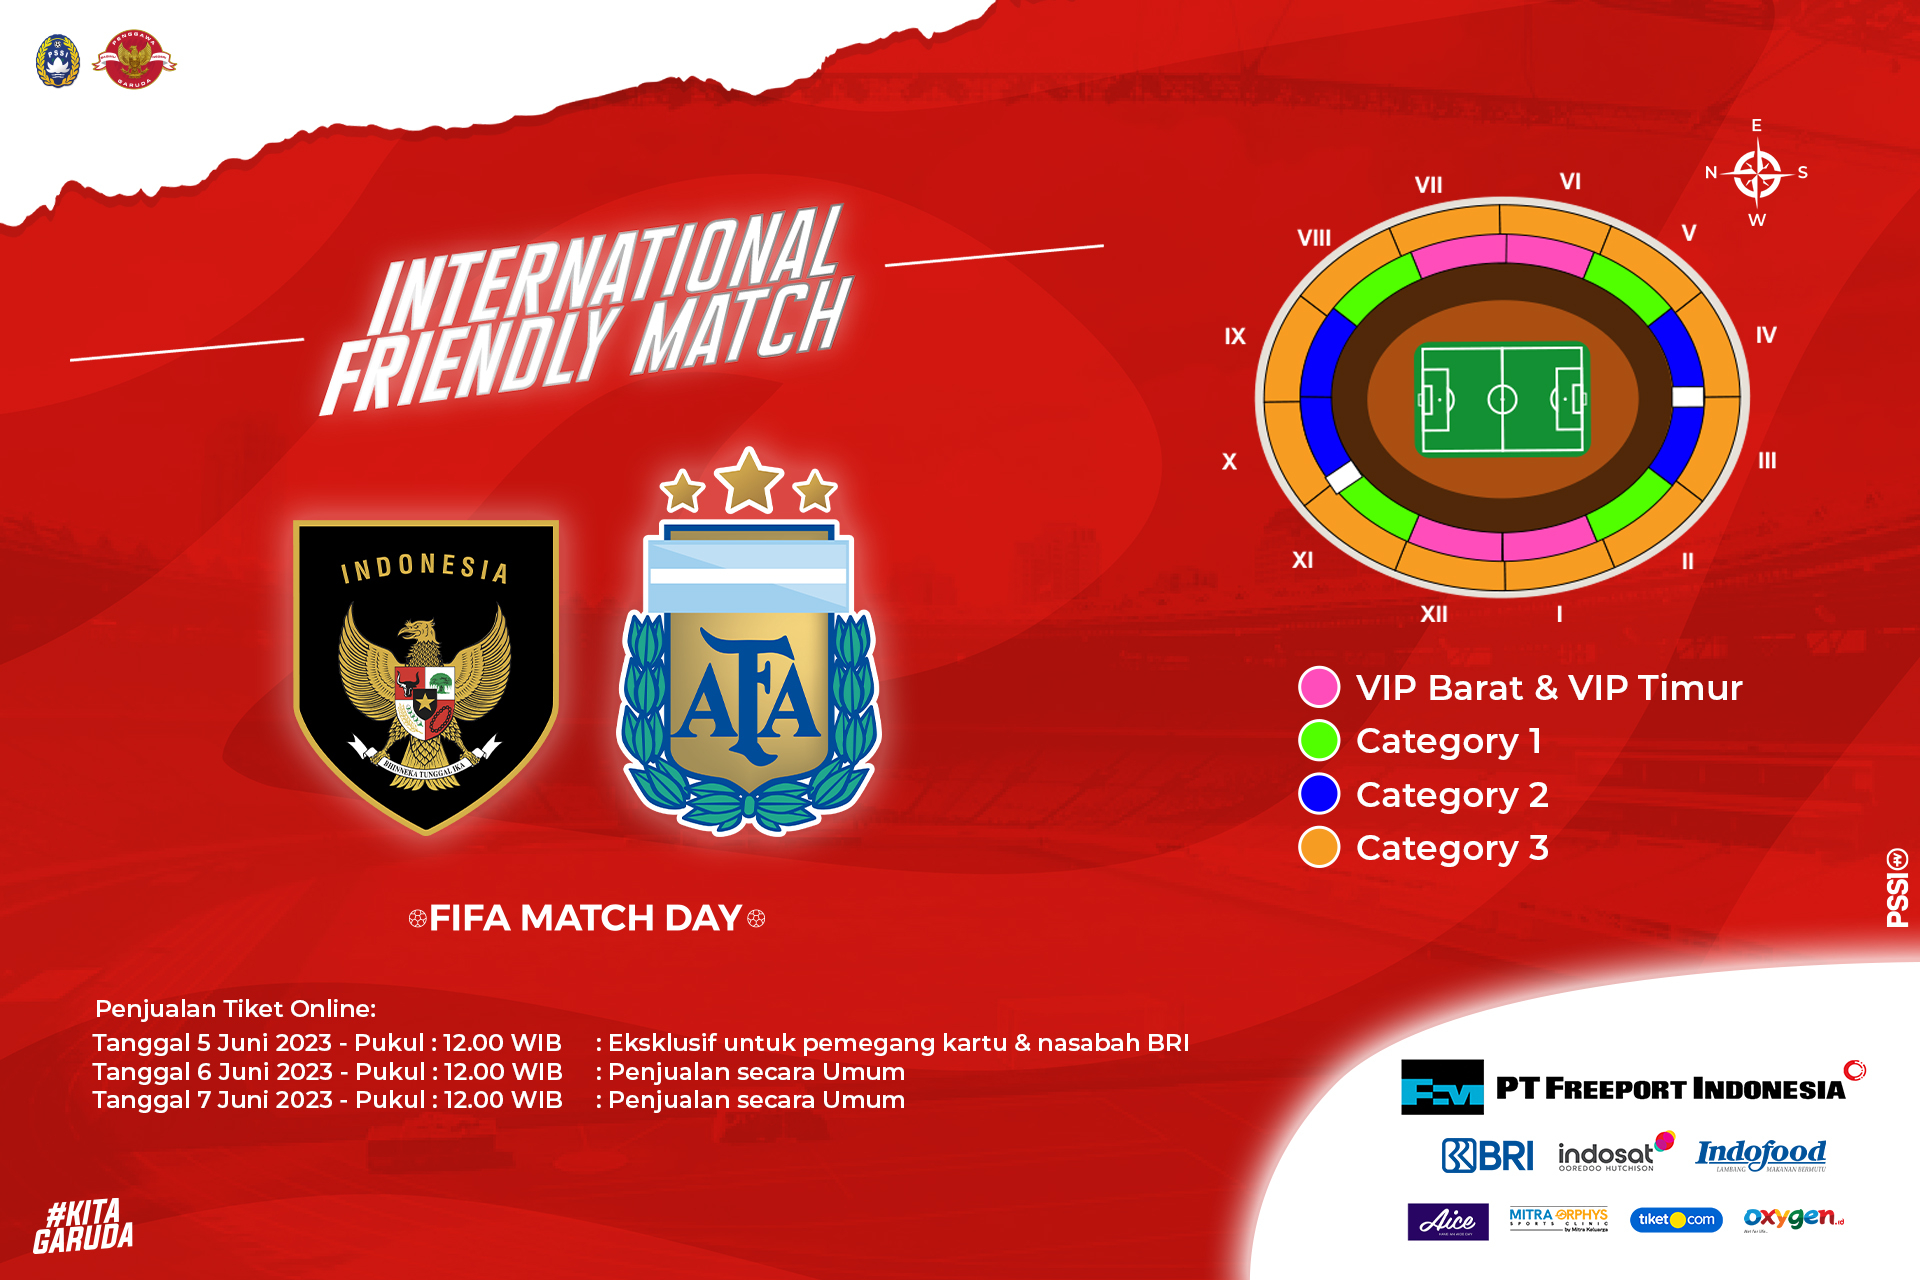 Tiket Indonesia vs Argentina Fifa Macth Day Harga Promo 2023 - tiket.com